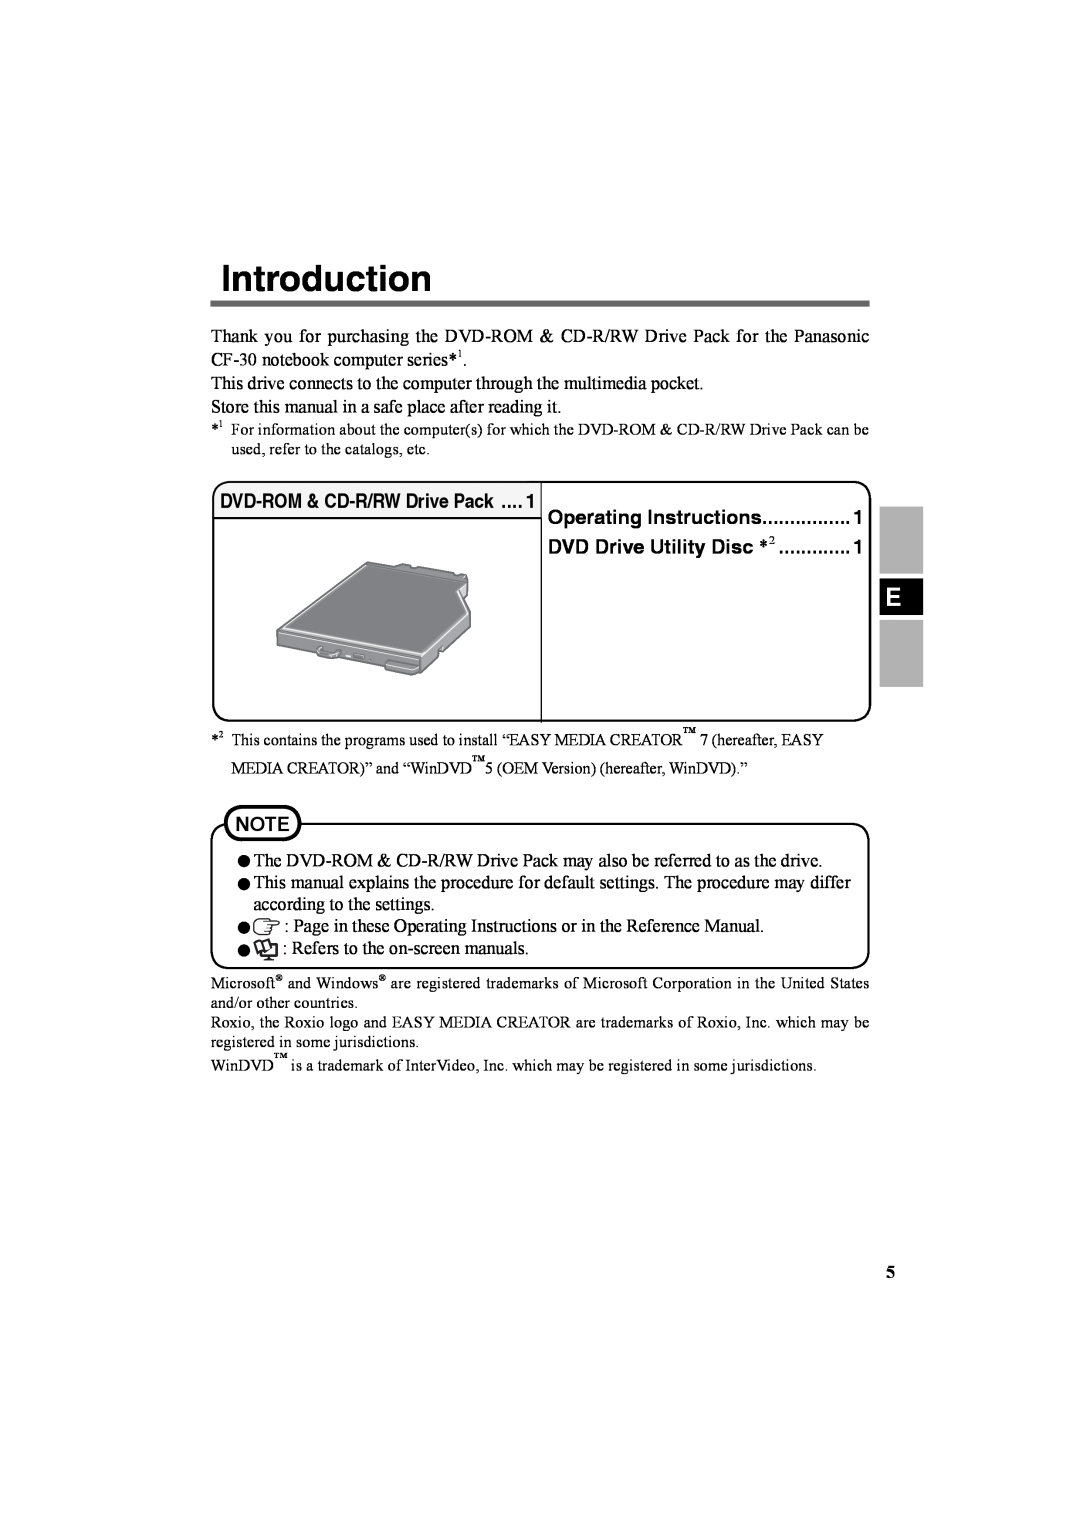 Panasonic CF-VDR301U Introduction, DVD Drive Utility Disc, DVD-ROM & CD-R/RW Drive Pack ....1 Operating Instructions 